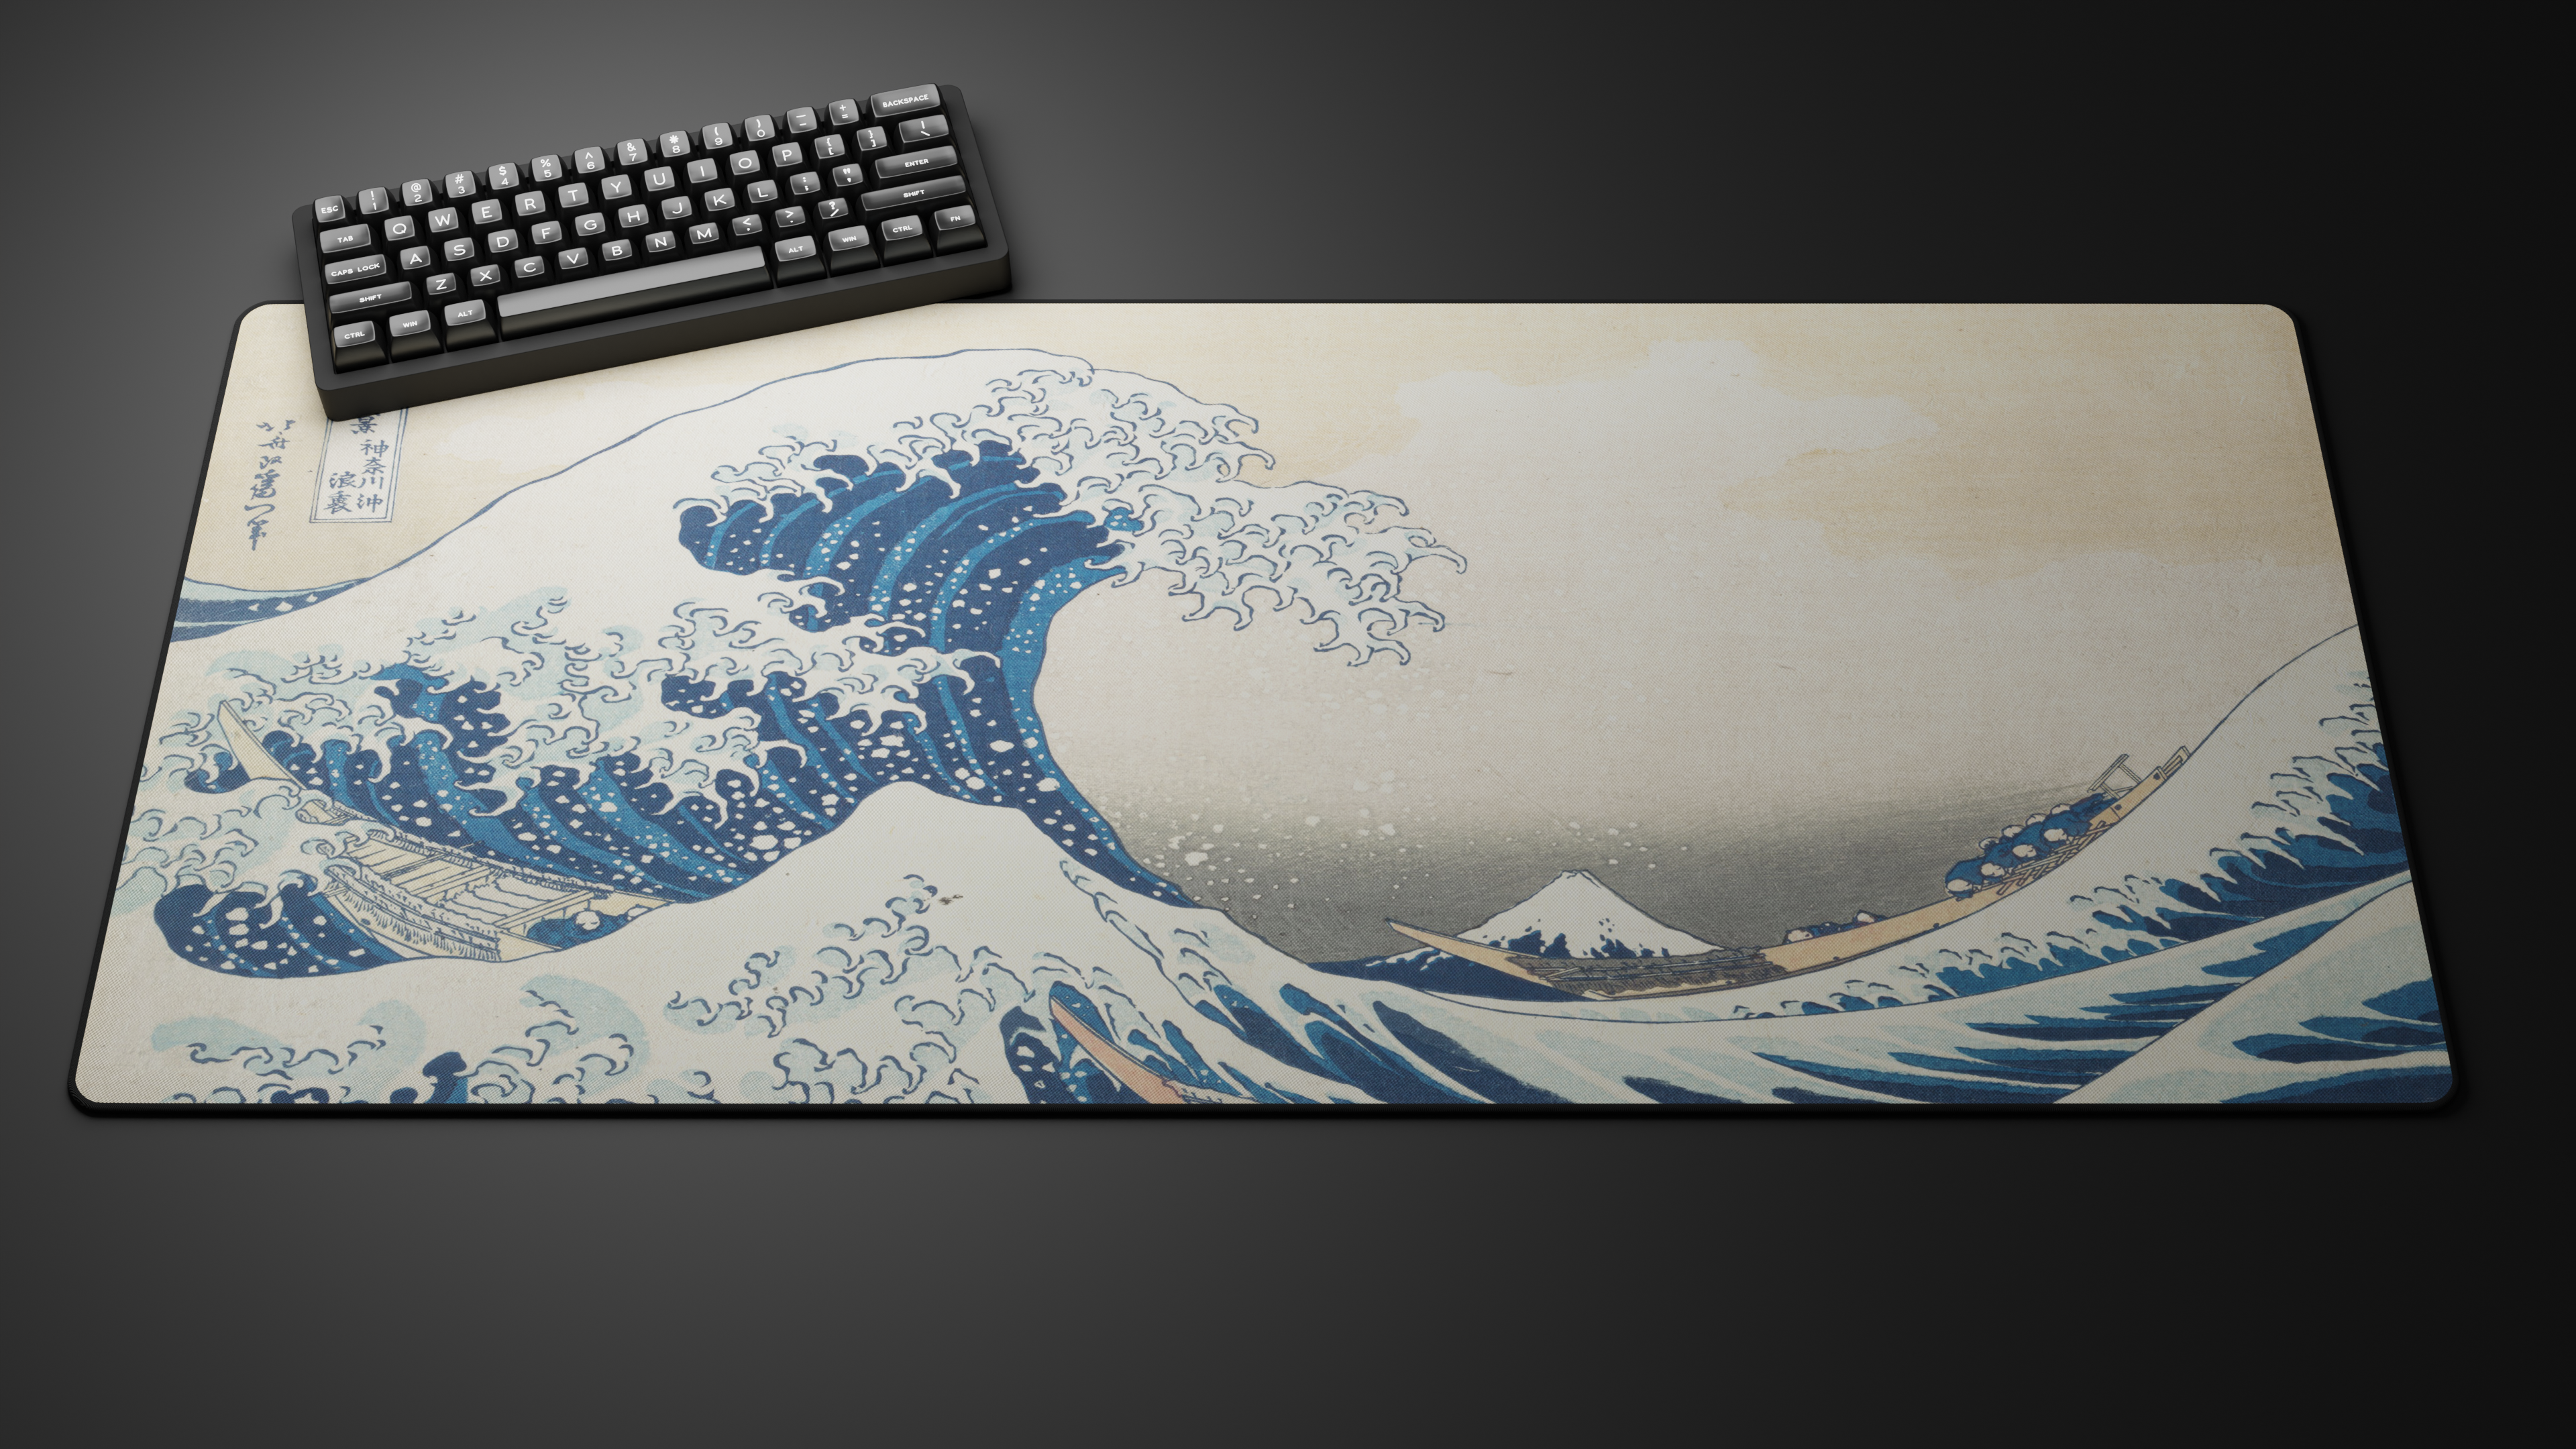 Deskmat 'The Great Wave Off Kanagawa' by glutch